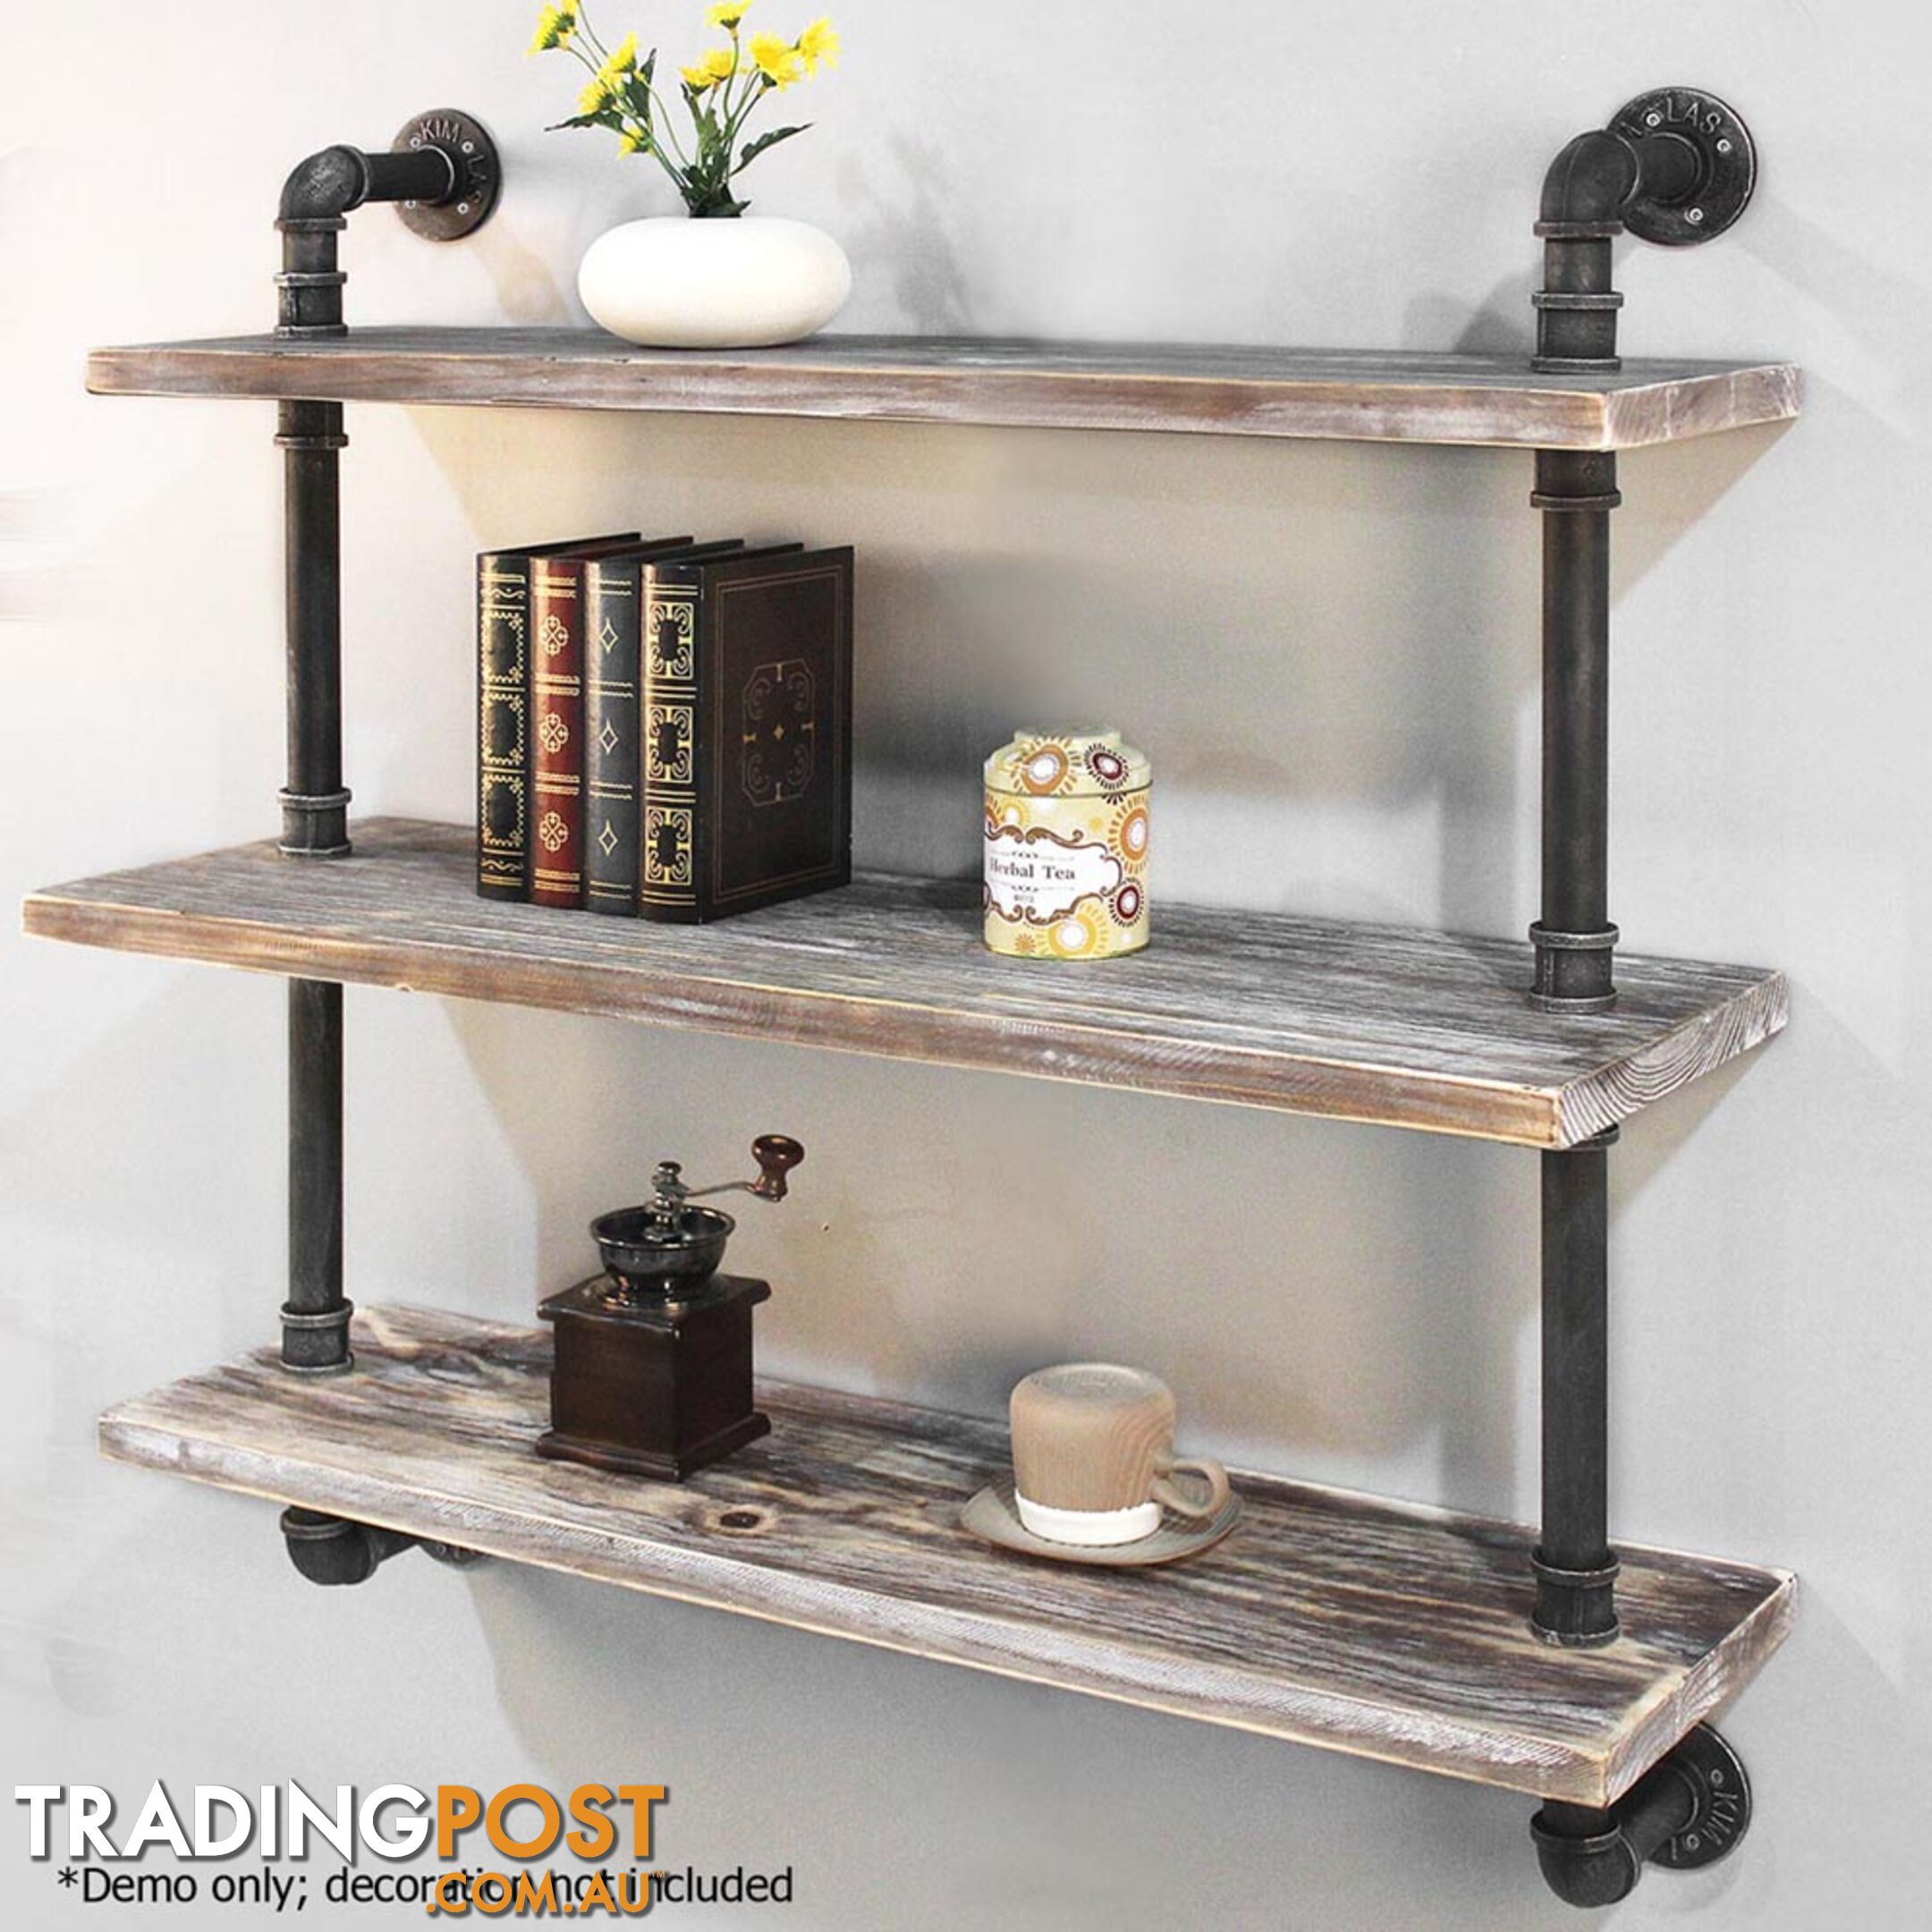 3 Level Rustic Industrial DIY Pipe Shelf Vintage Floating Shelves Wall Shelving